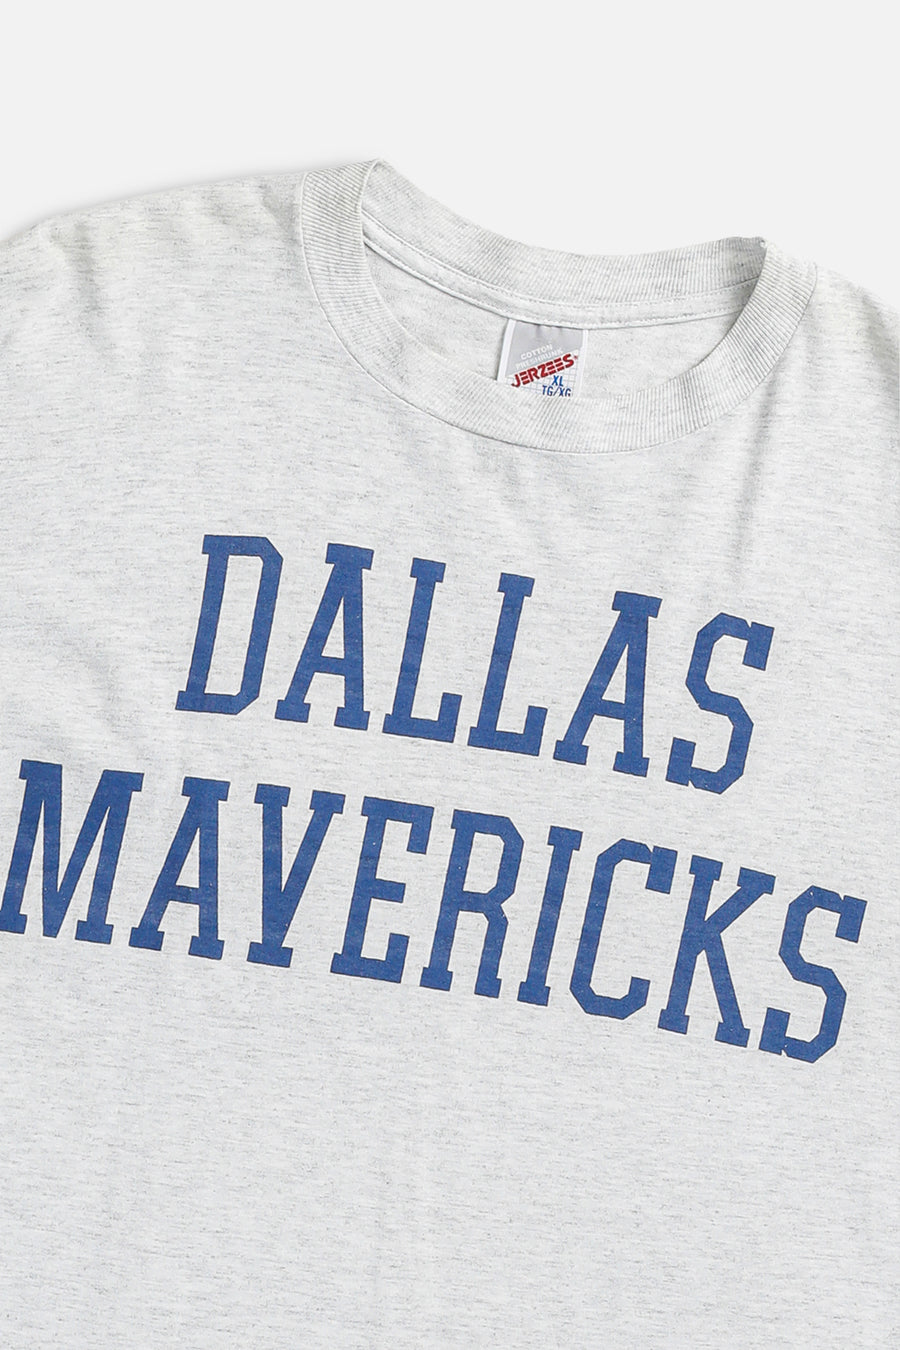 Vintage Dallas Mavericks NBA Tee - L